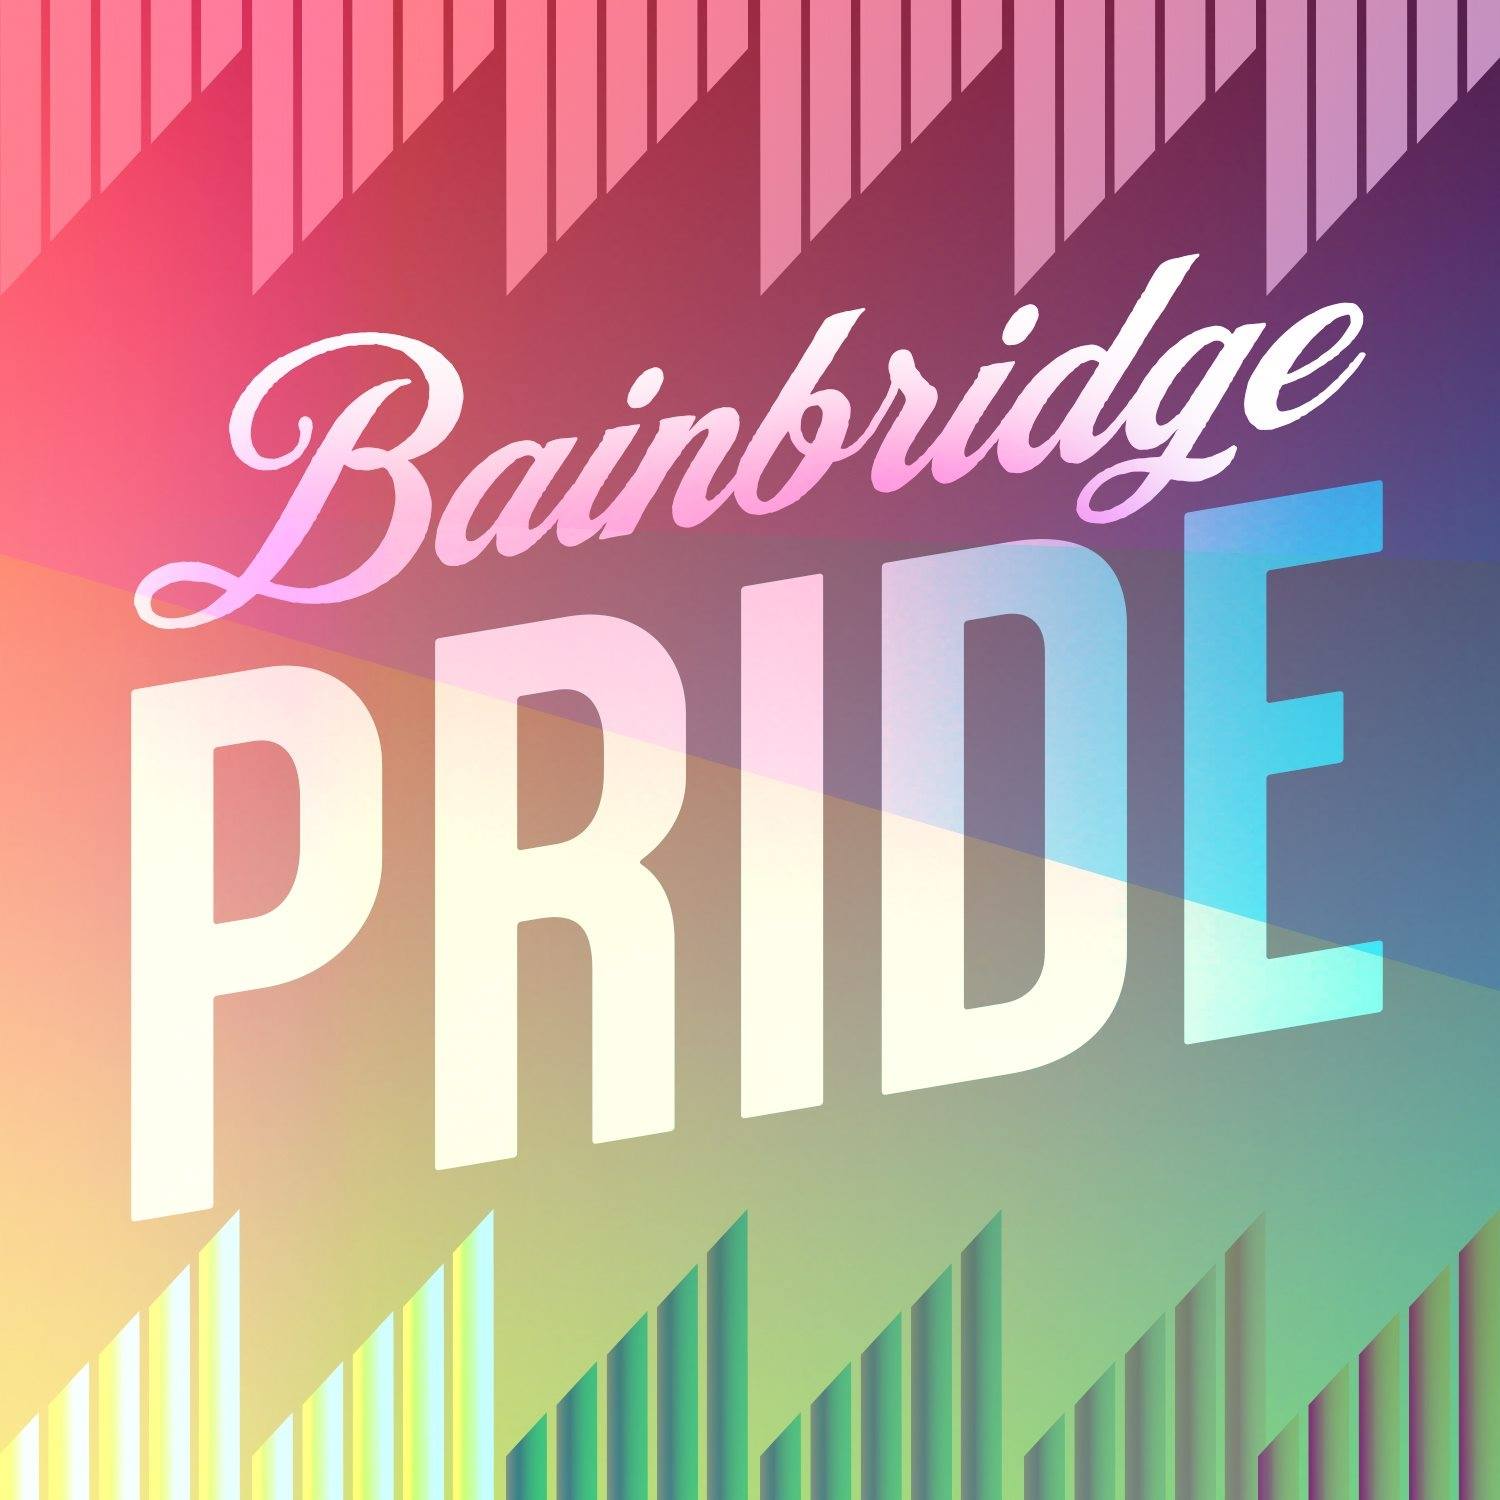 Transgender Day of Remembrance 2020 A Note Bainbridge Island Museum